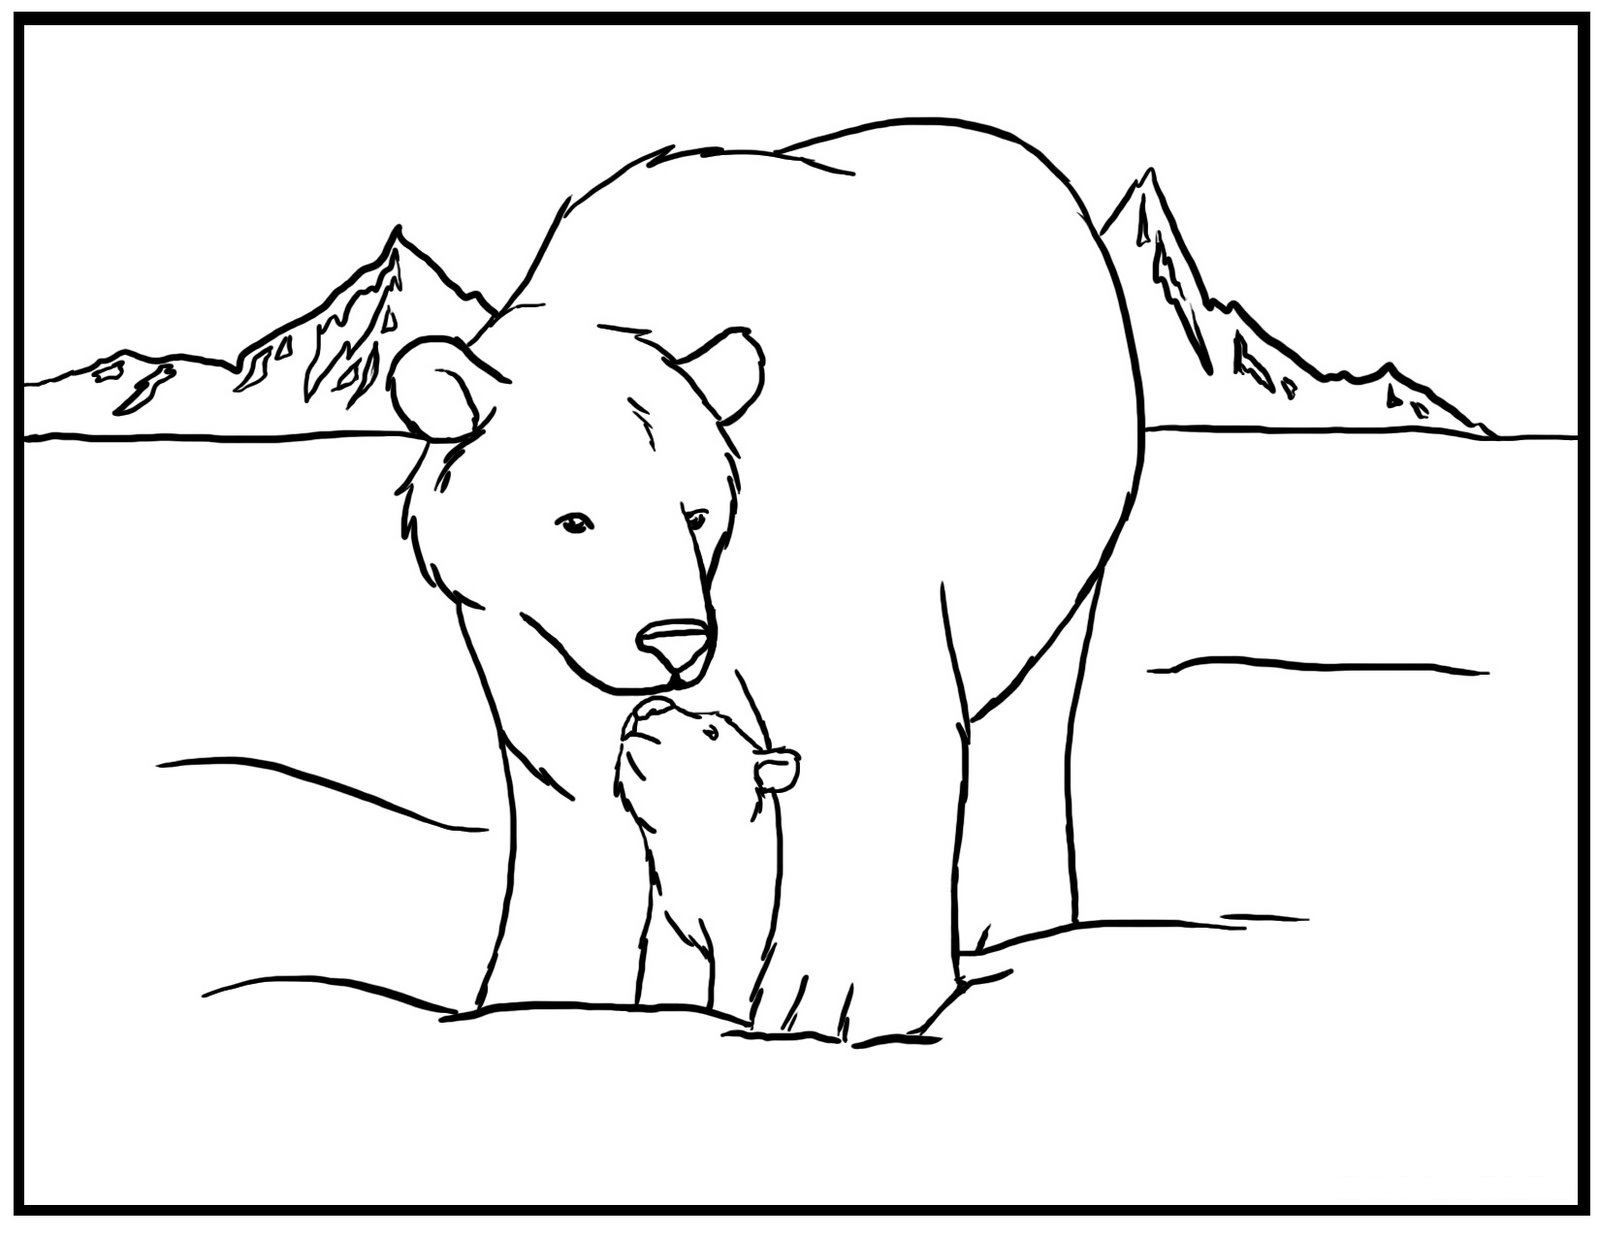 Polar Bear and Cub Coloring Page